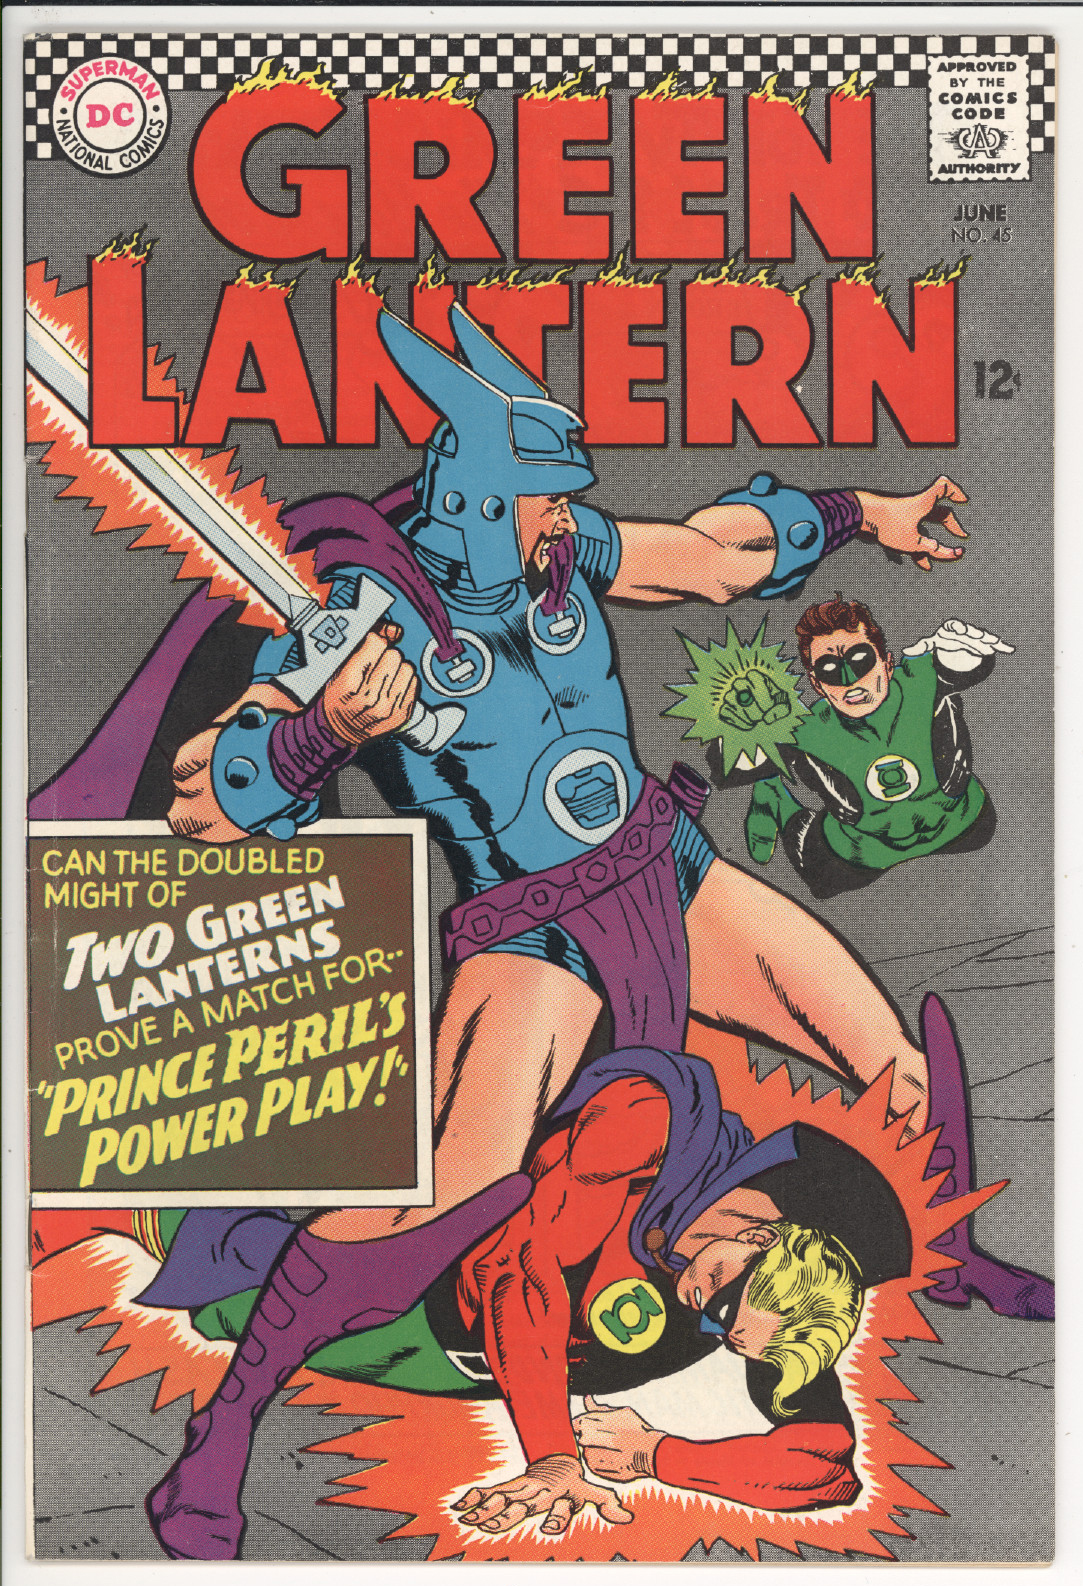 Green Lantern #45 front